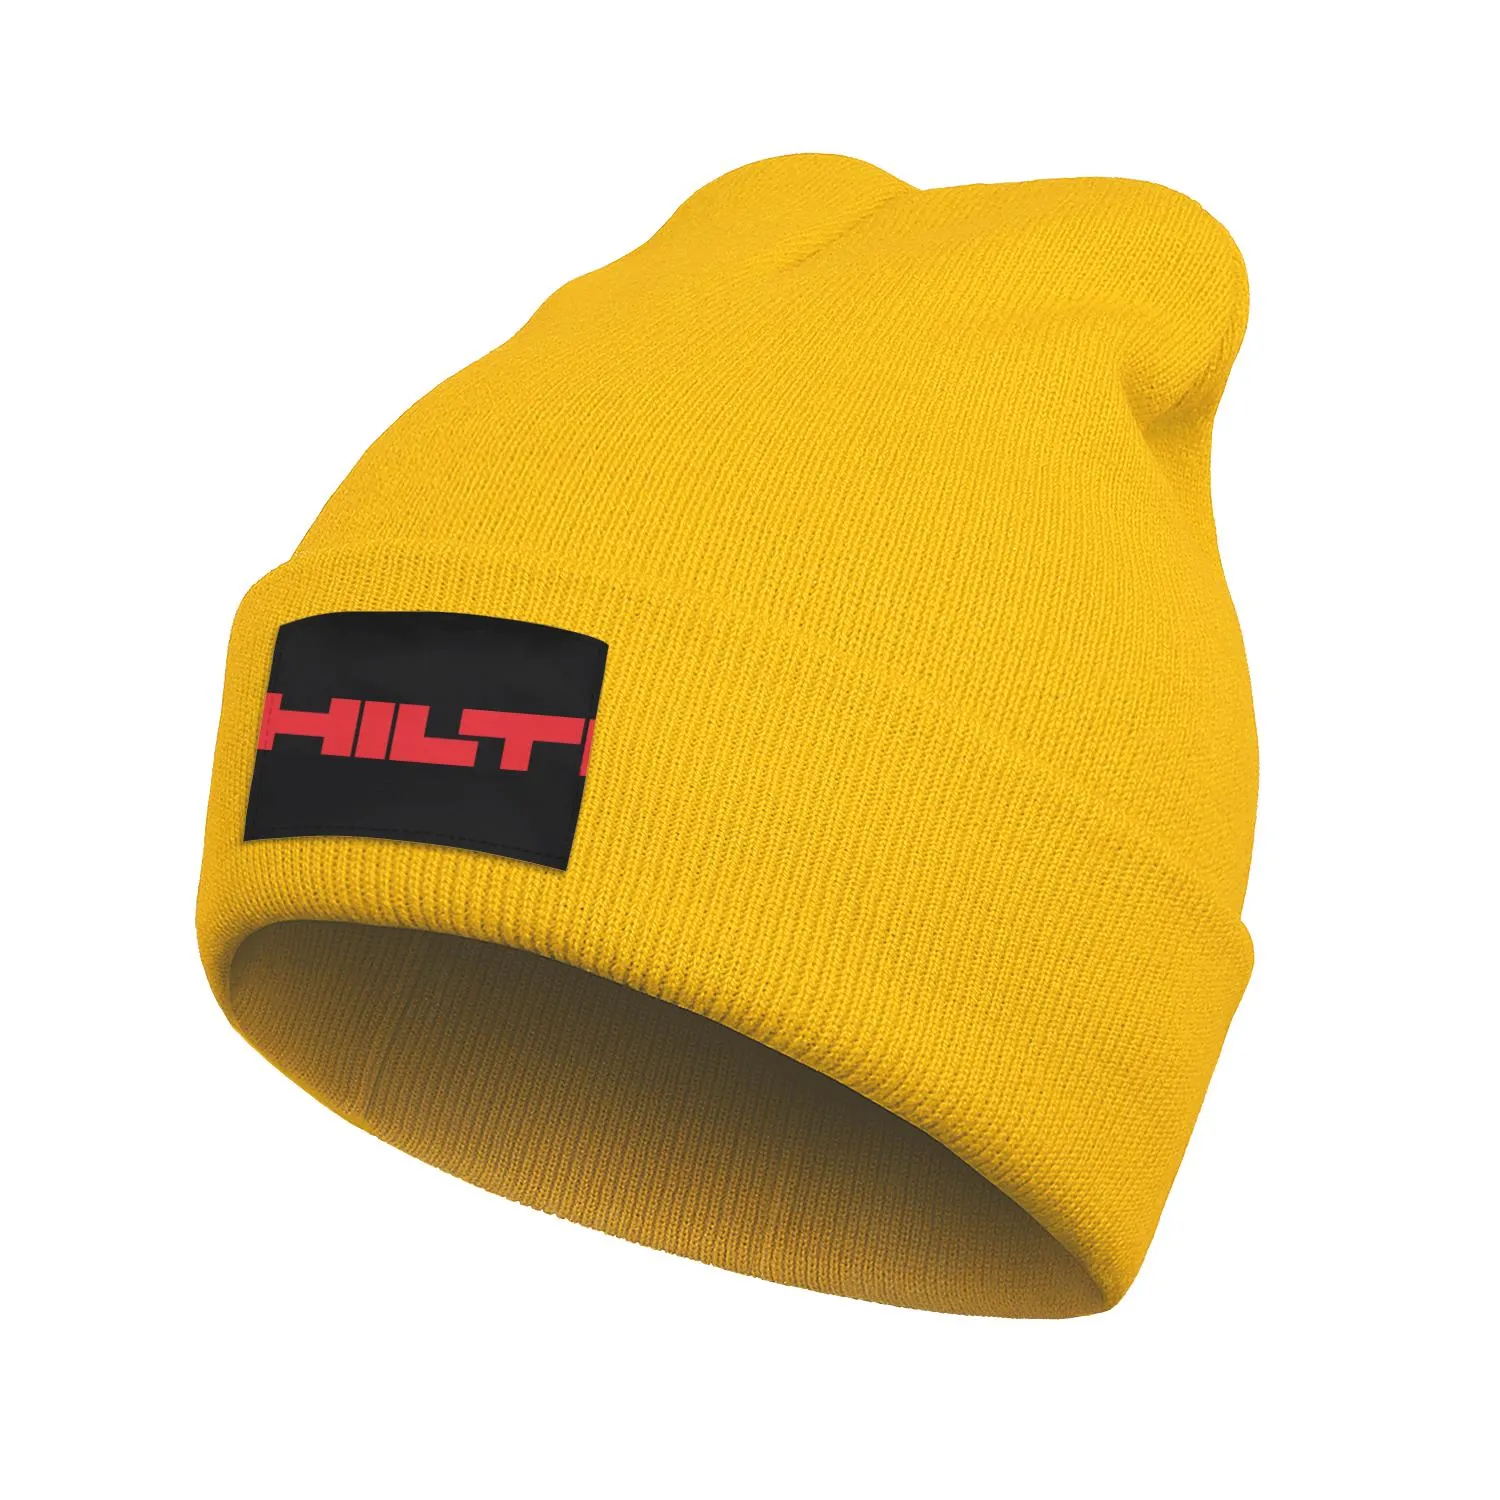 Moda hilti ag empresa grupo ferramentas inverno gorro de esqui chapéus se encaixa sob capacetes flash ouro branco mármore vintage old4505277